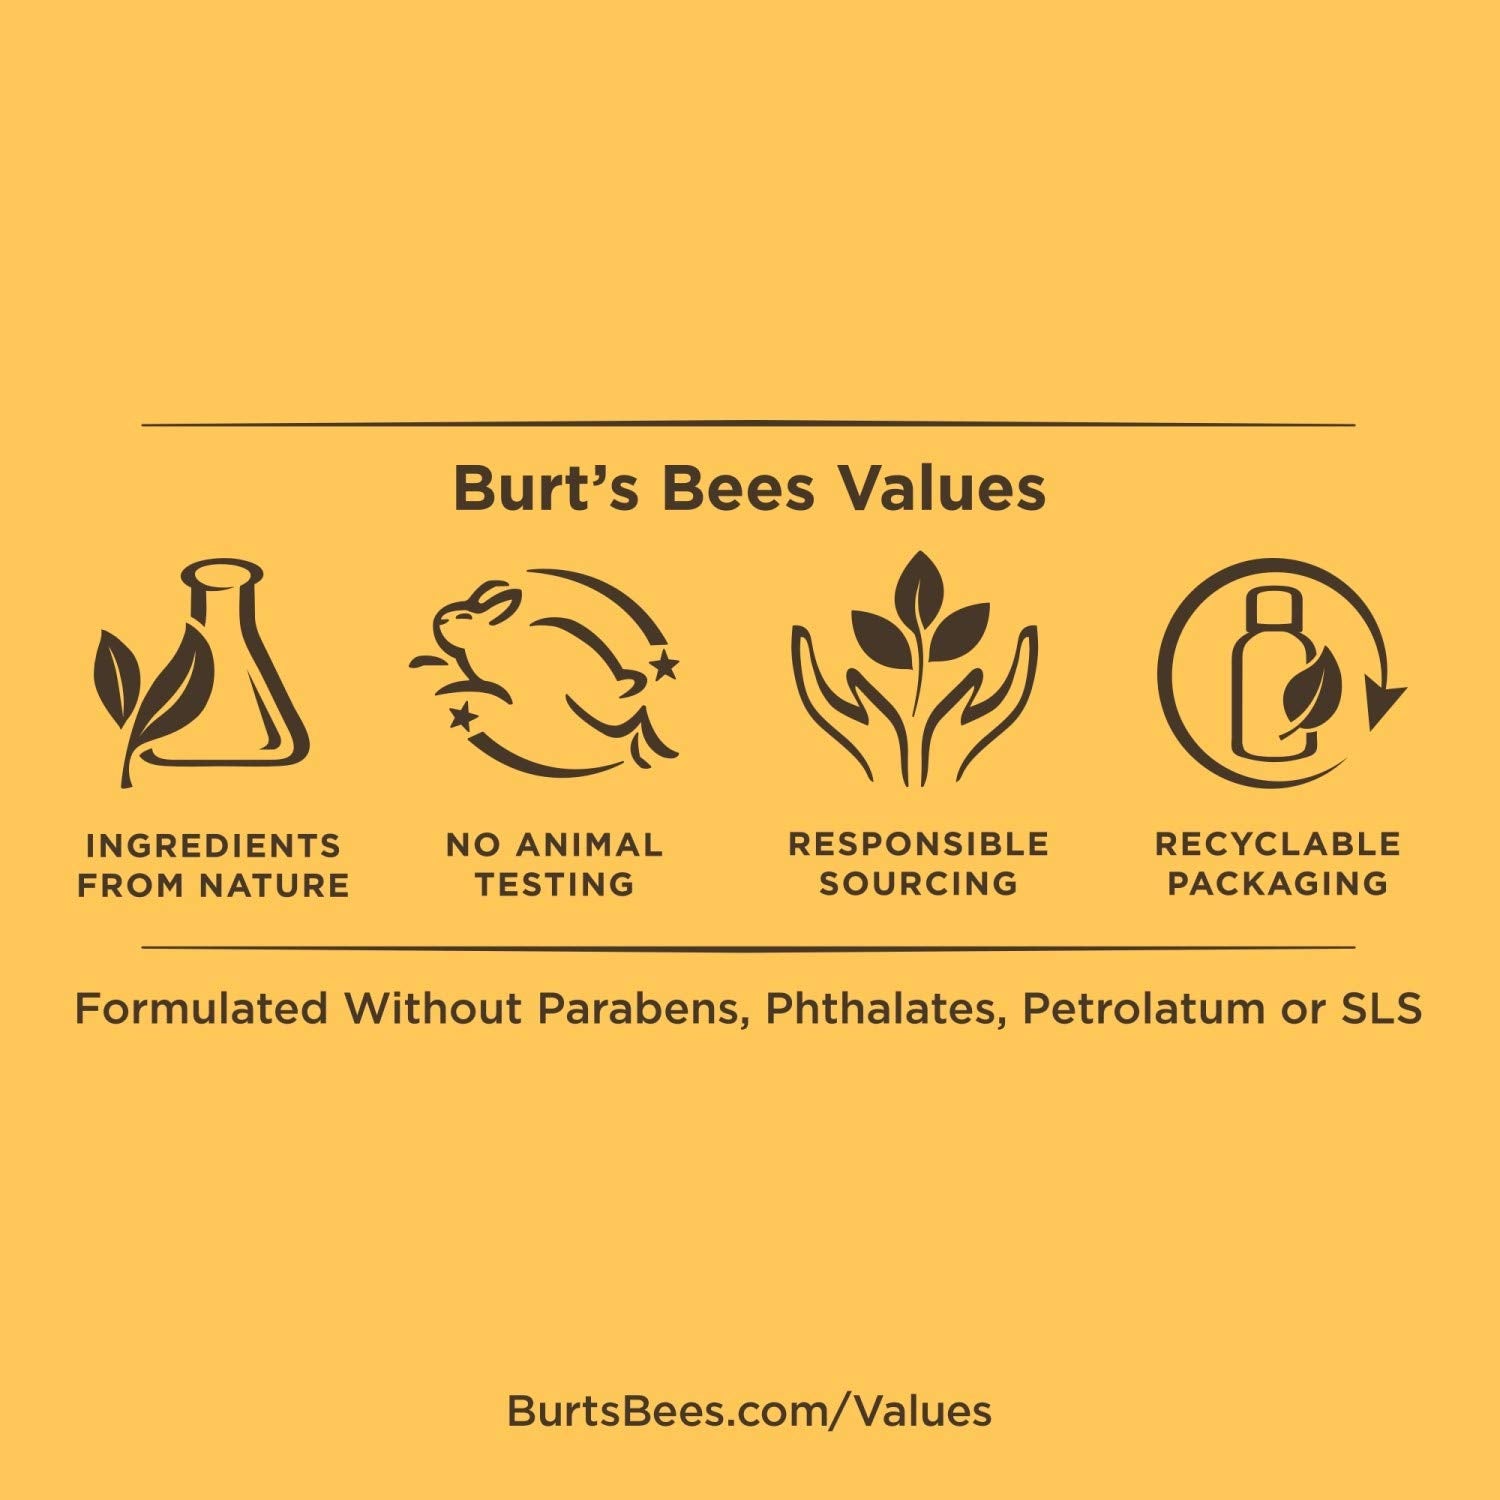 Burts Bees Baby Nourishing Lotion Fragrance Free 170gm Yellow - Baby Moo